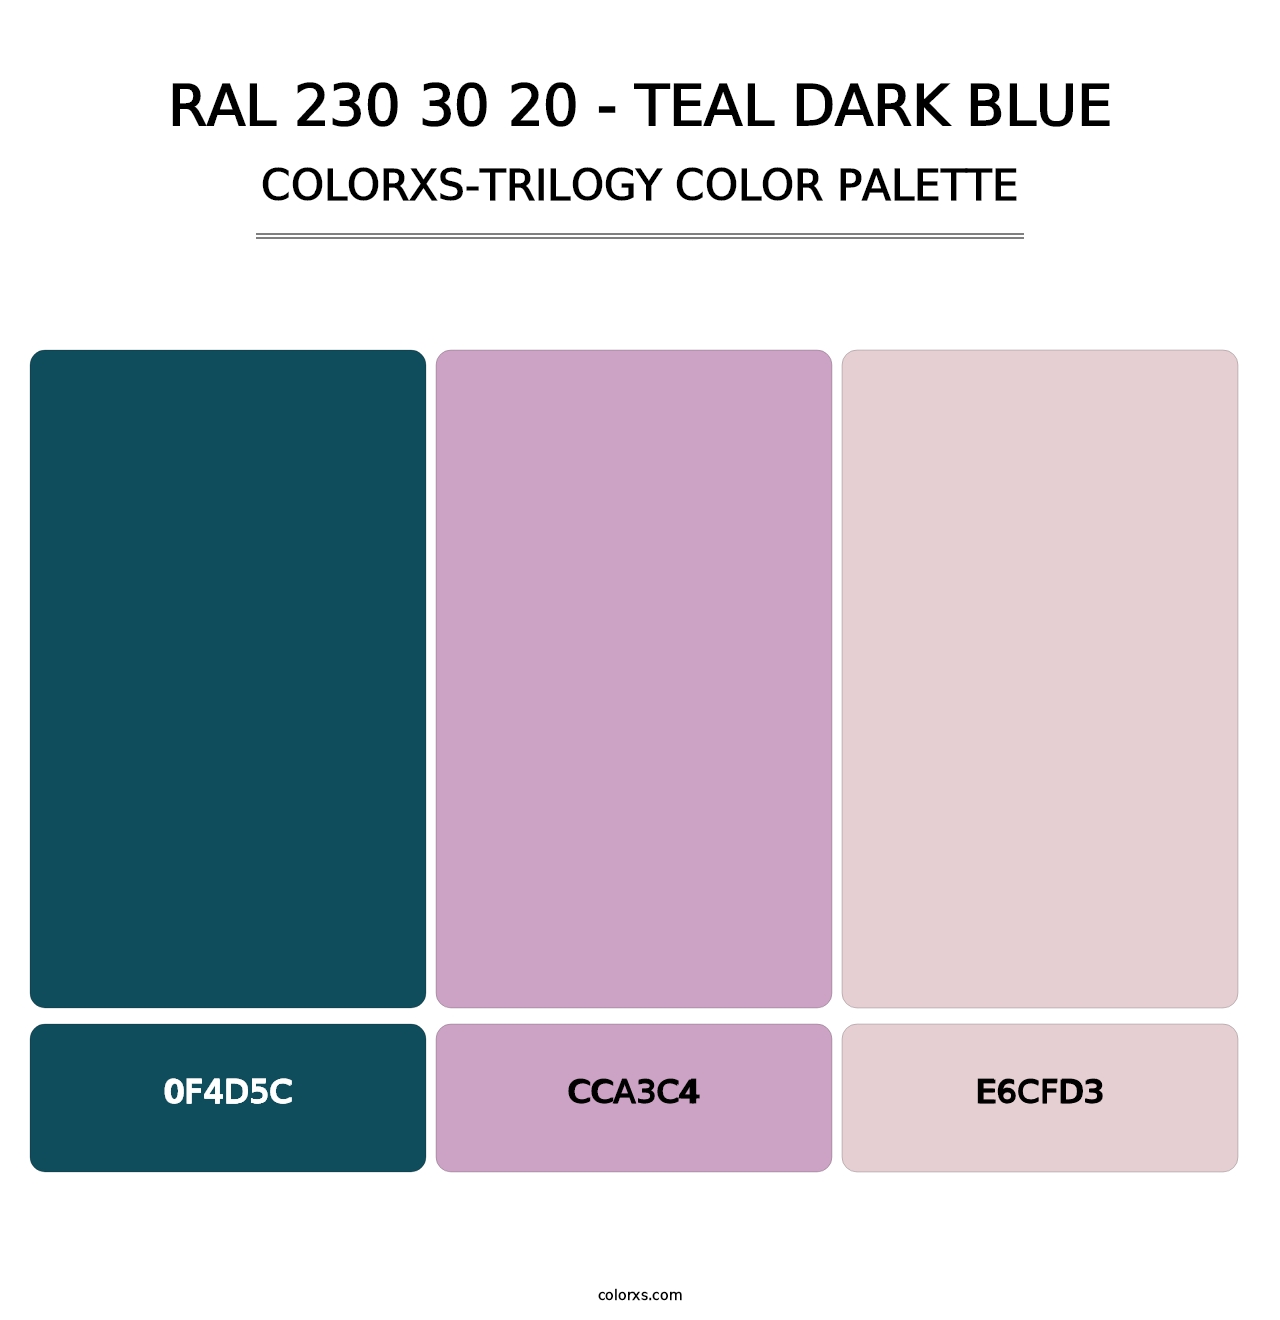 RAL 230 30 20 - Teal Dark Blue - Colorxs Trilogy Palette